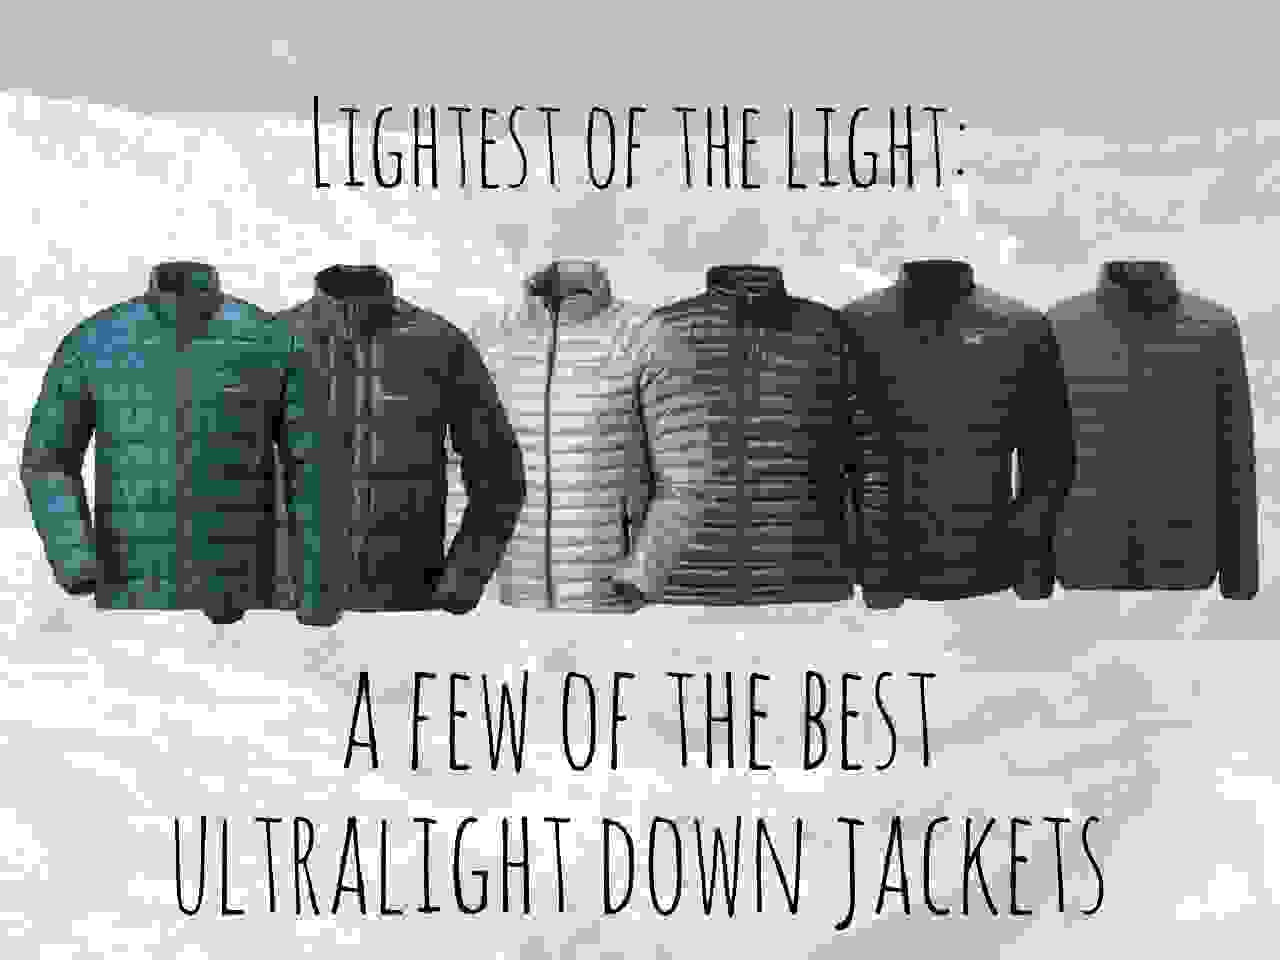 Ultralight Down Jackets